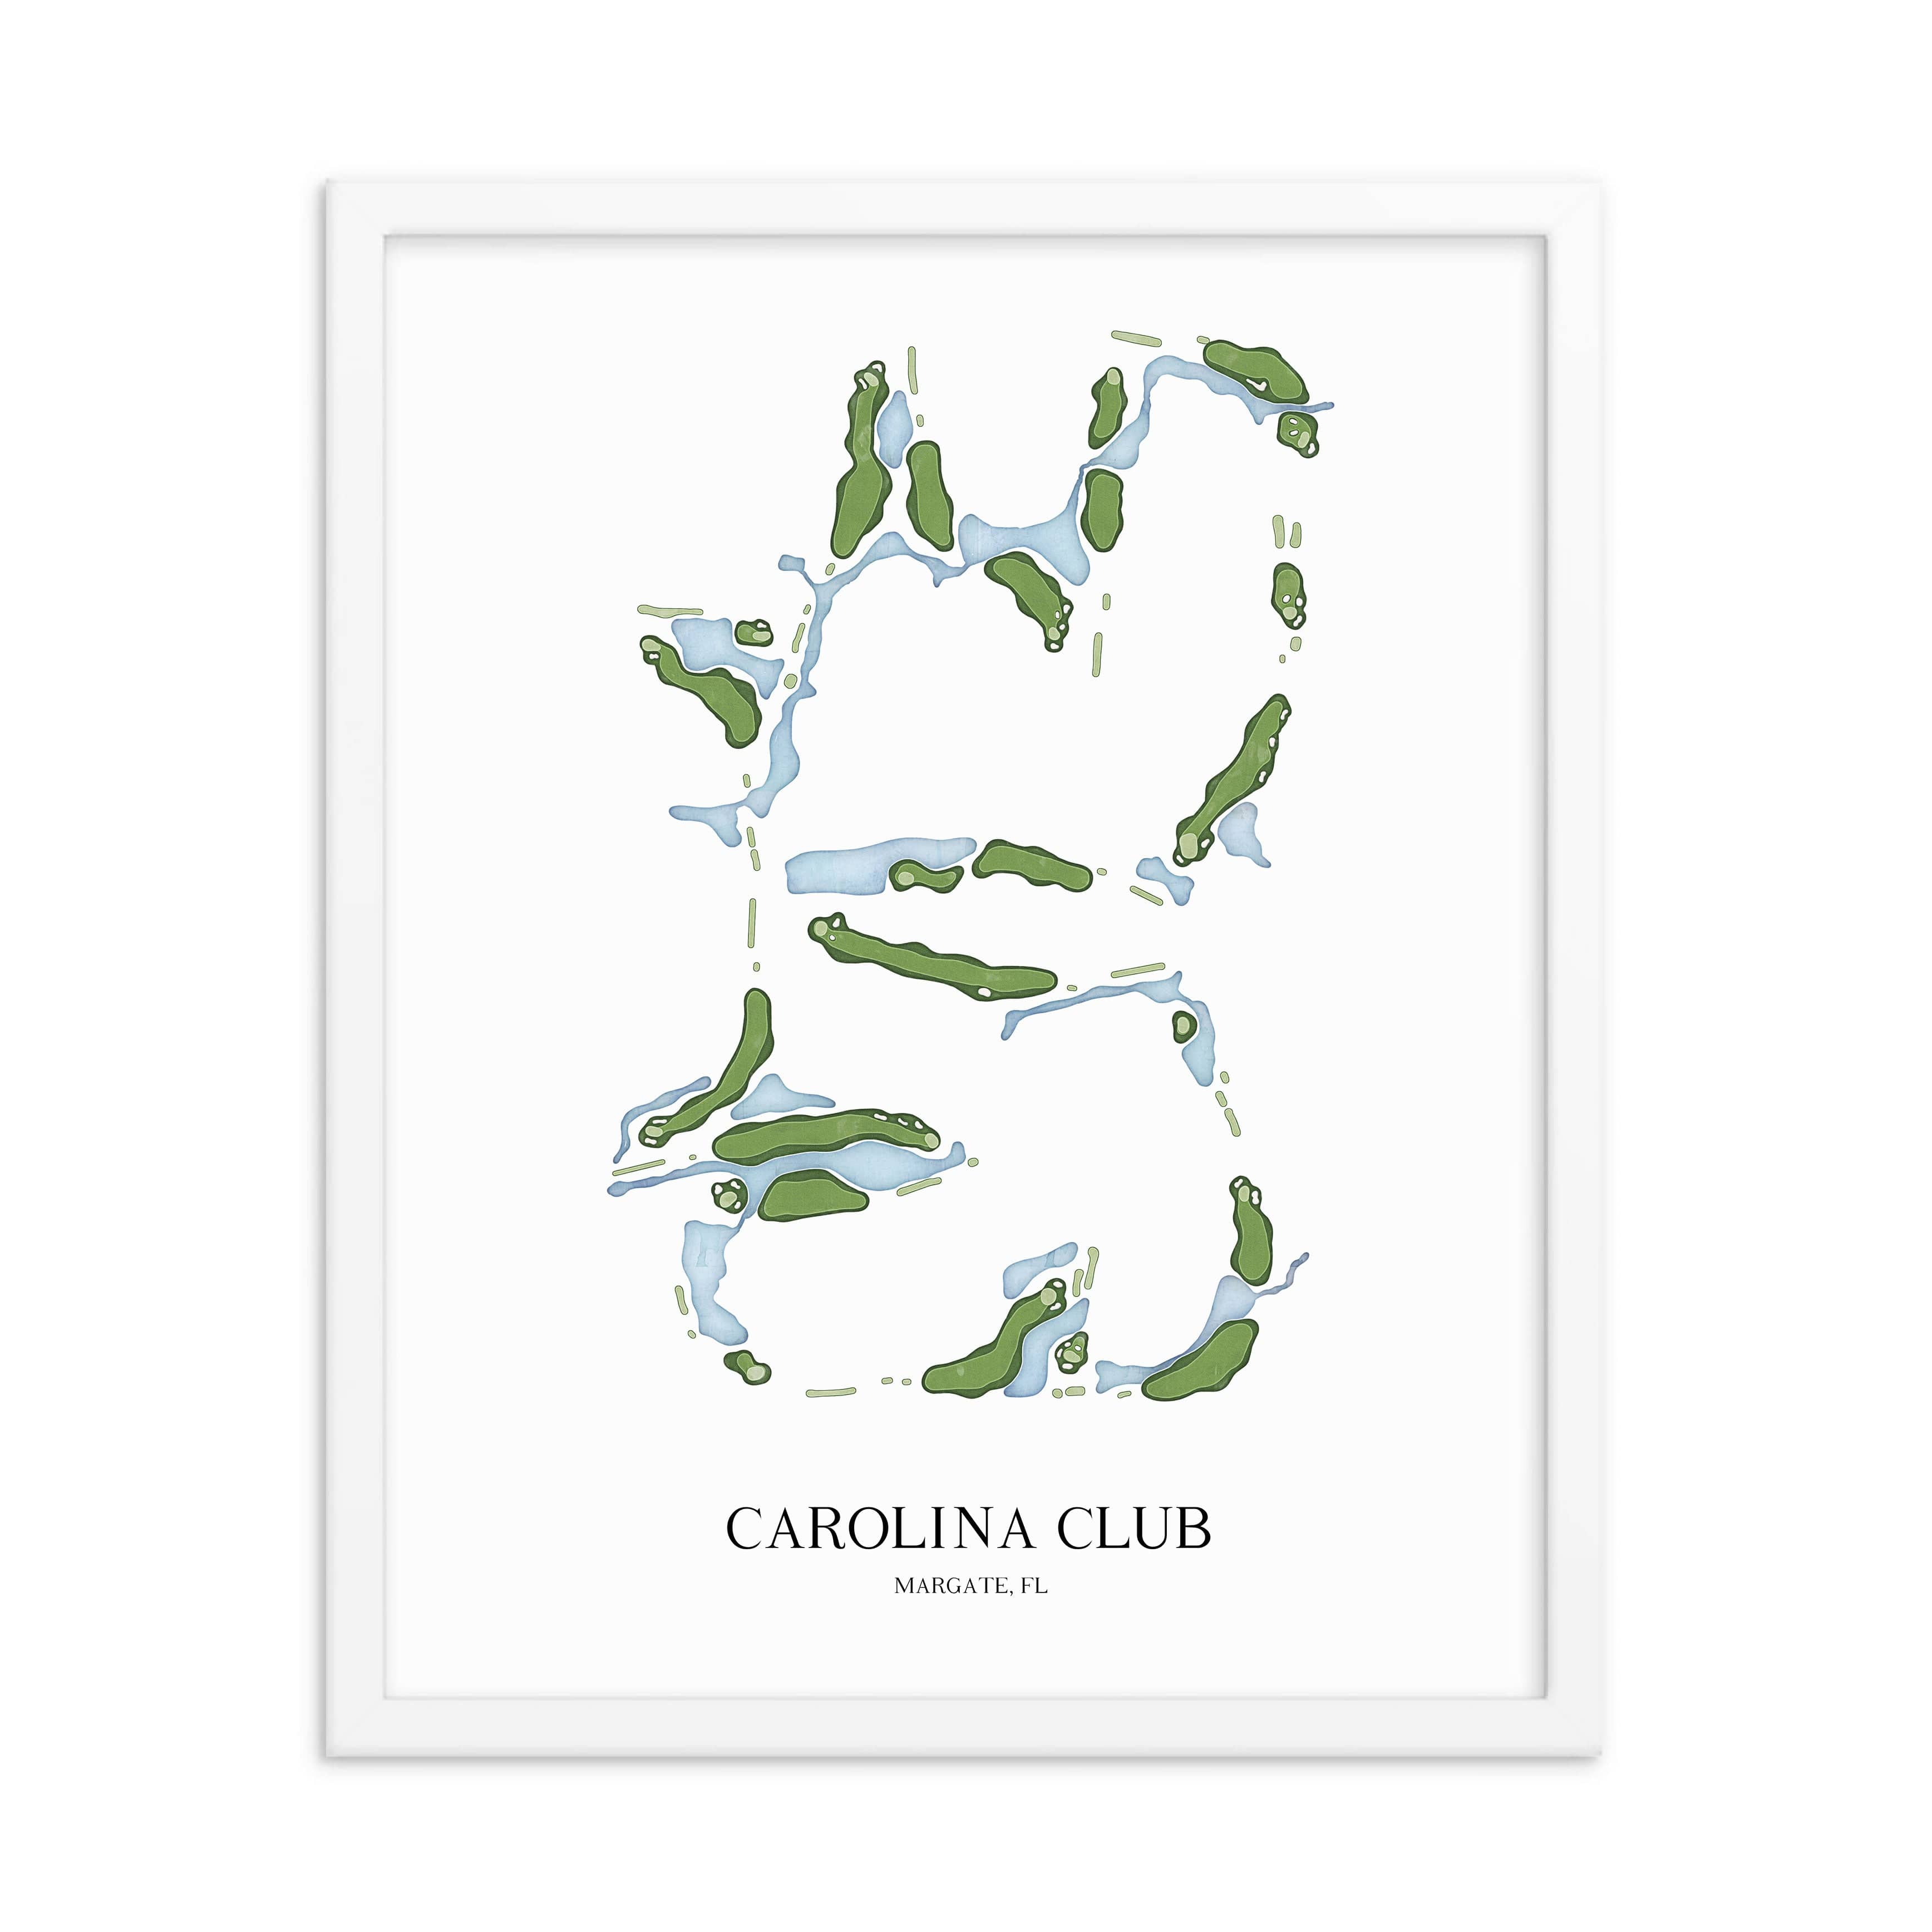 The 19th Hole Golf Shop - Golf Course Prints -  The Carolina Club Golf Course Map